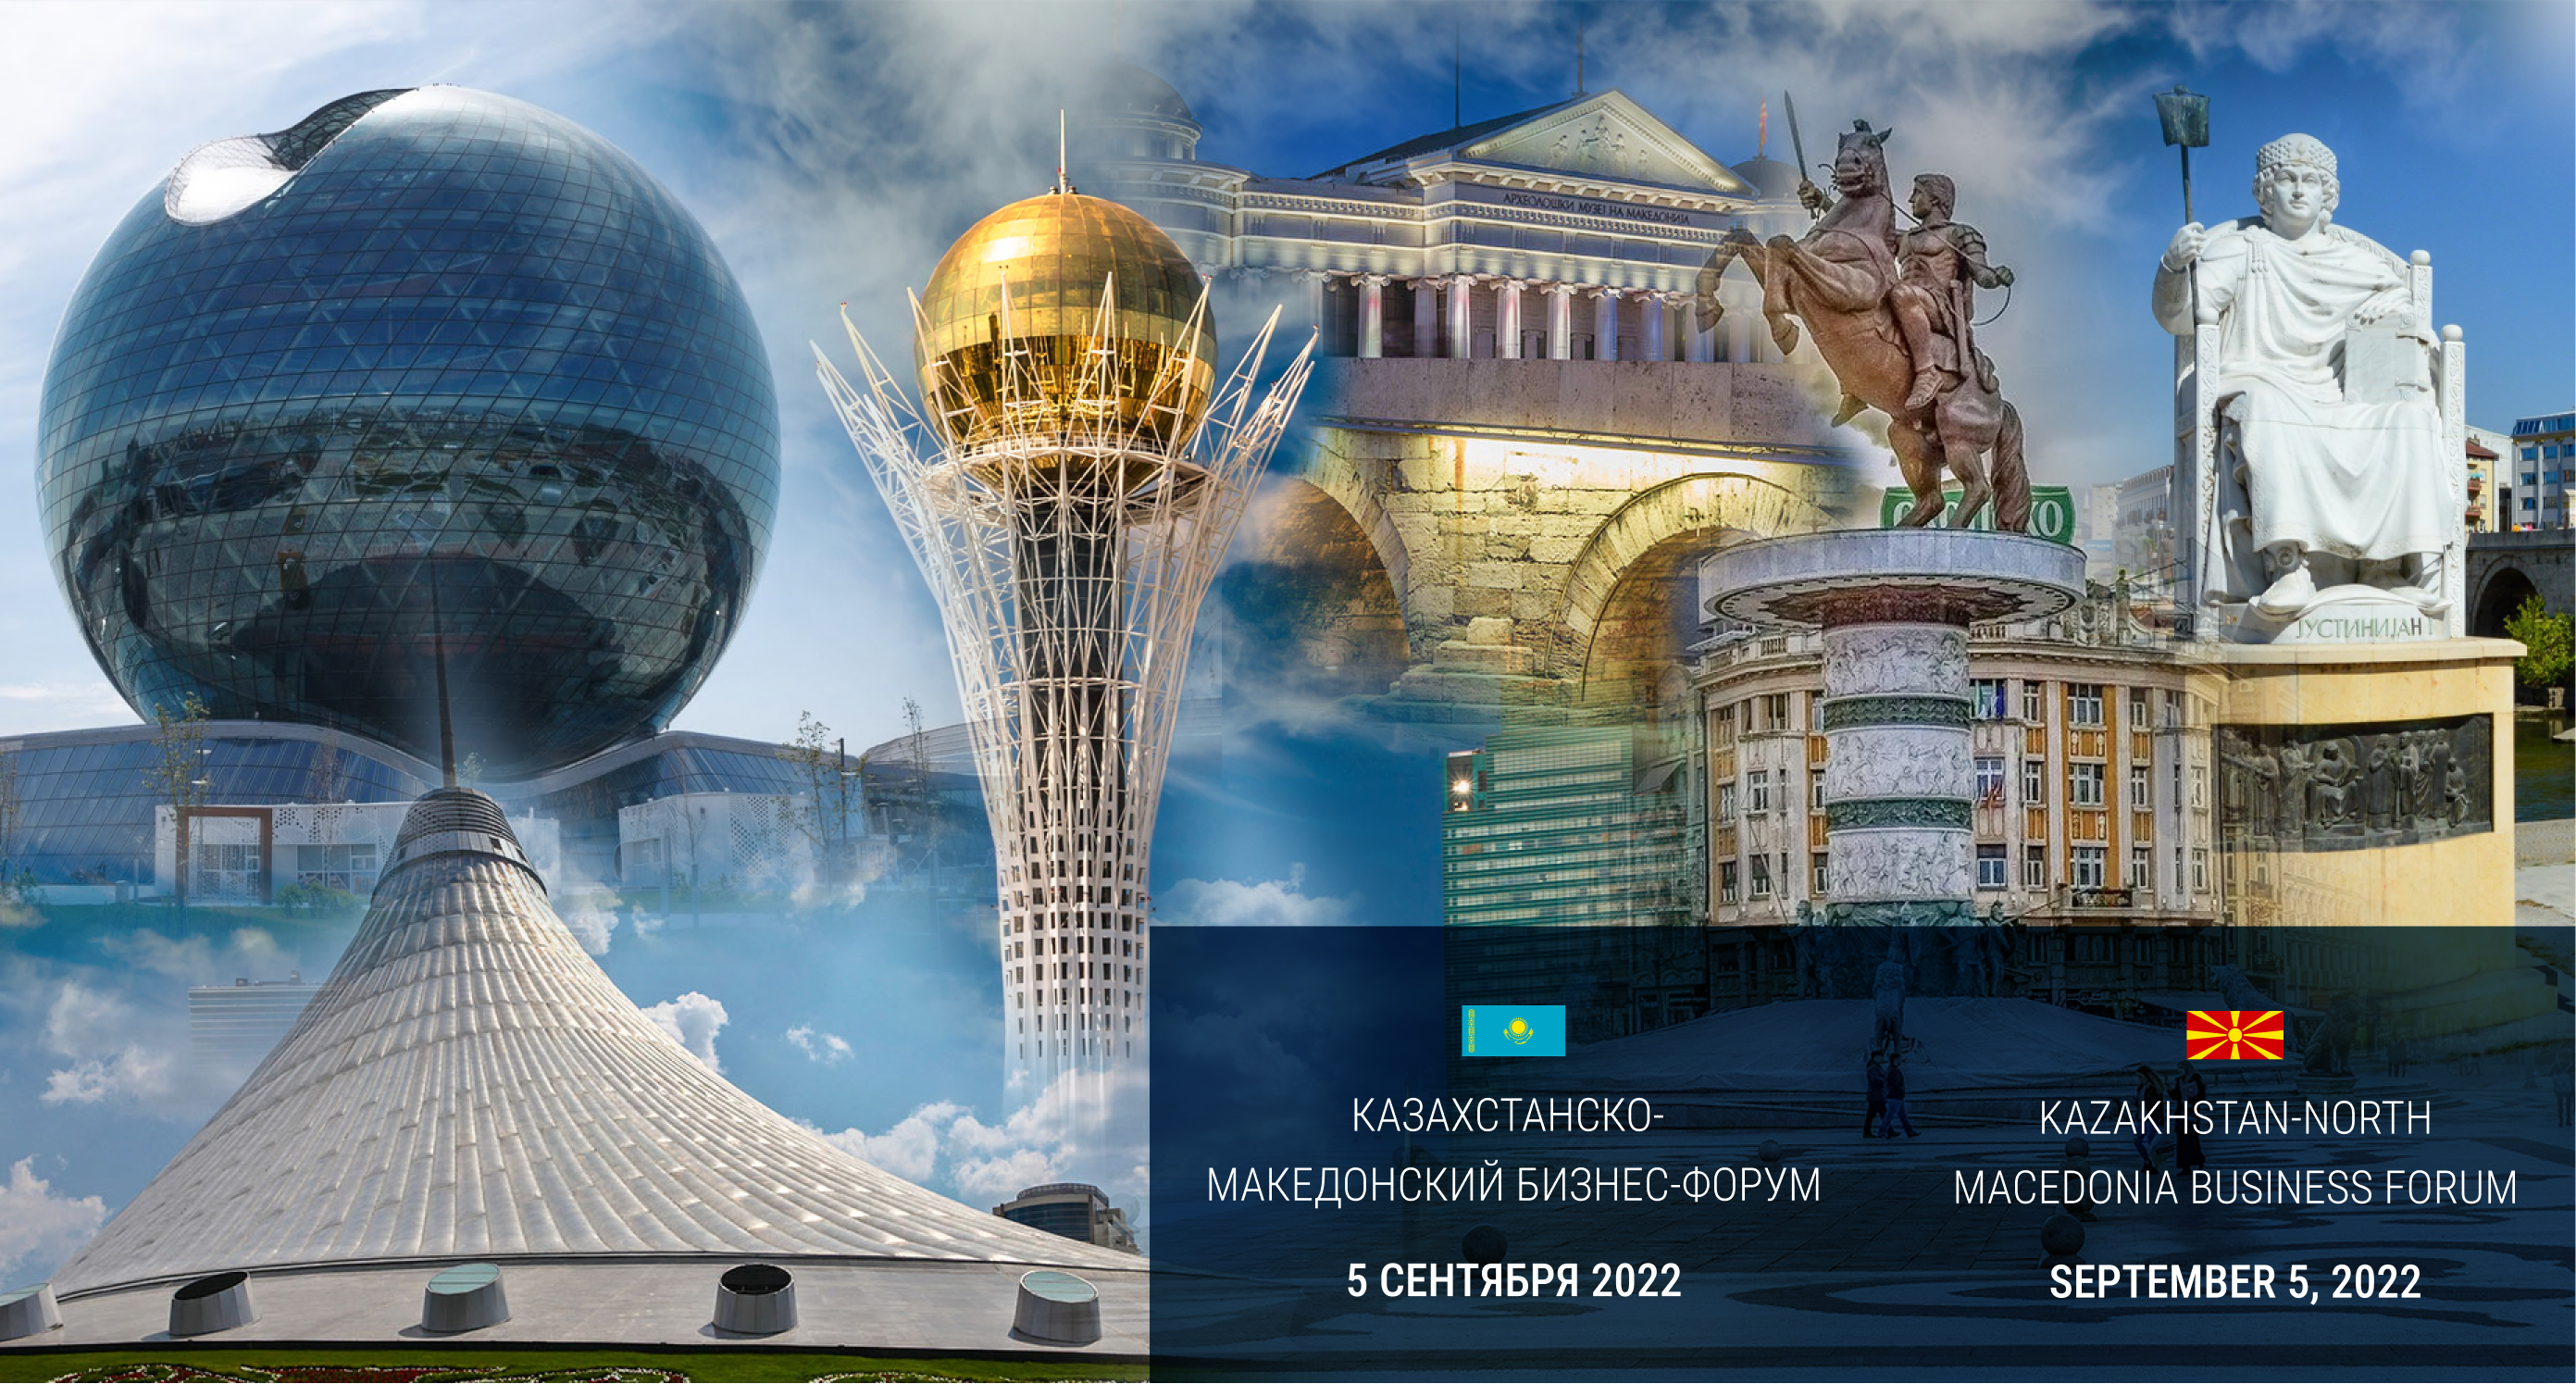 Kazakhstan-North Macedonia Business Forum